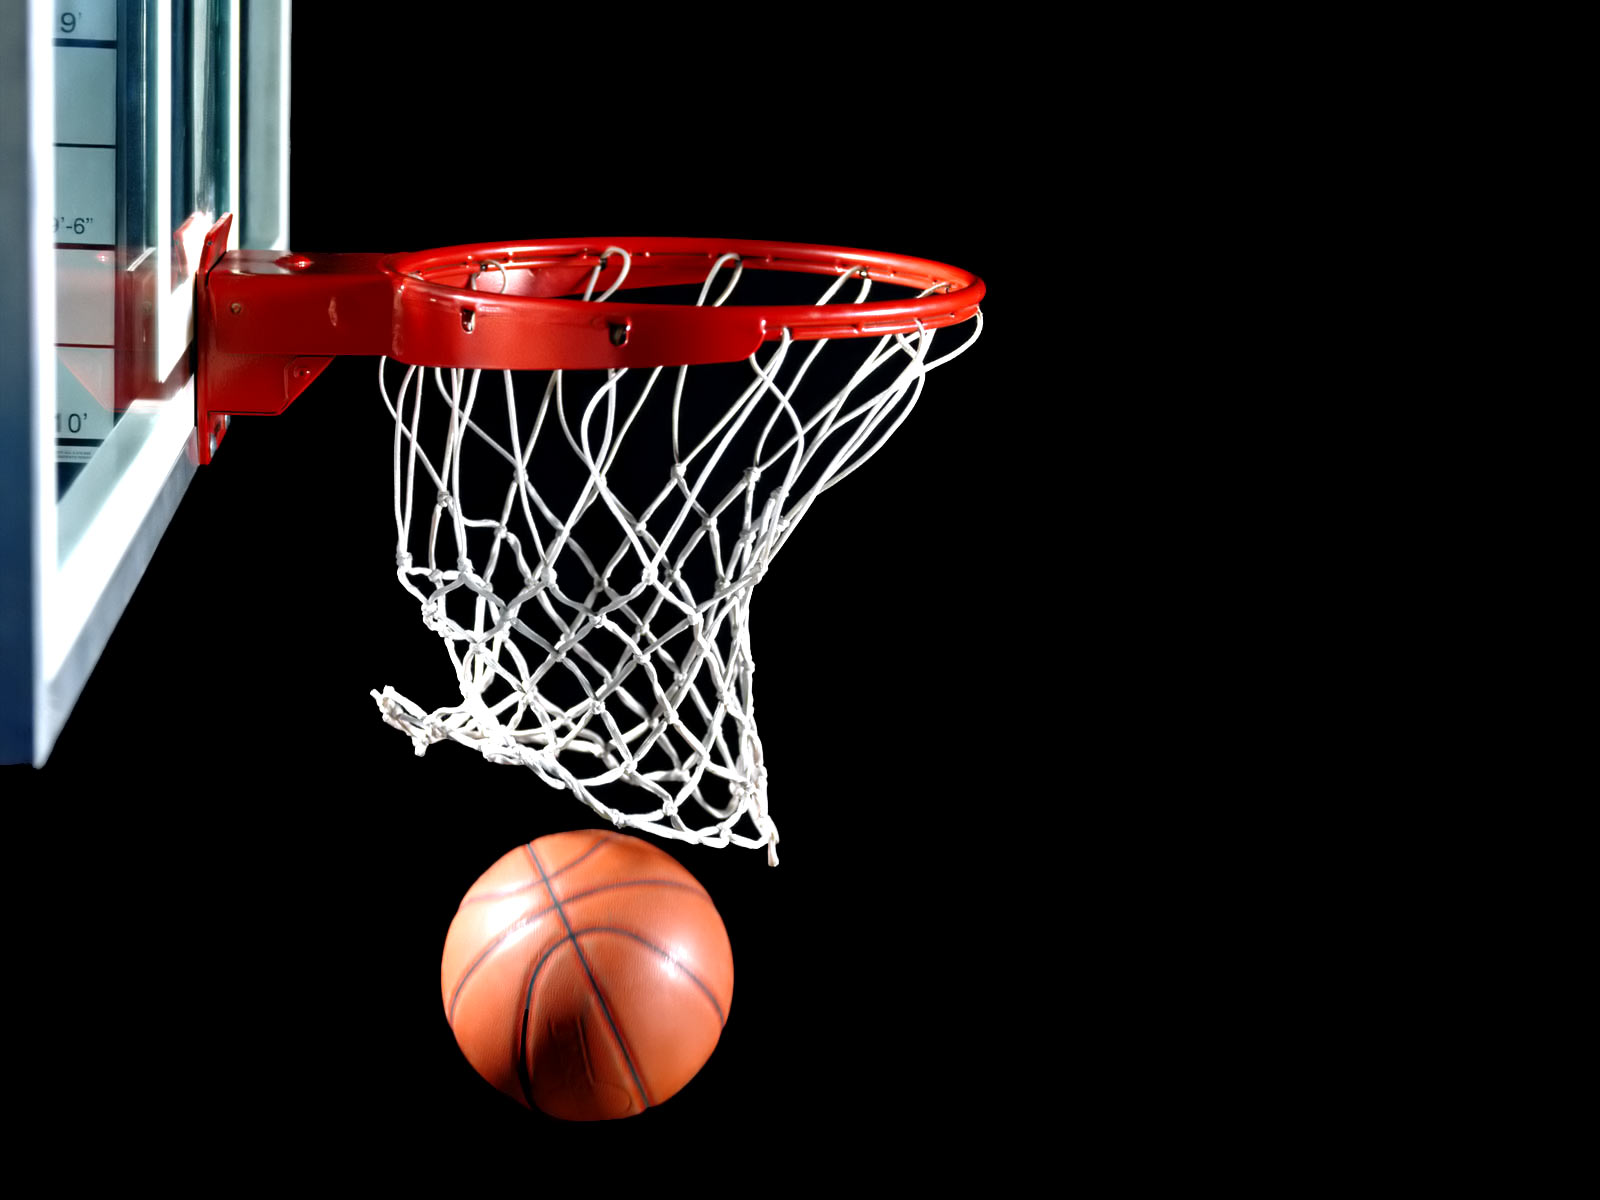 Nba Basketball Hoop Diameter